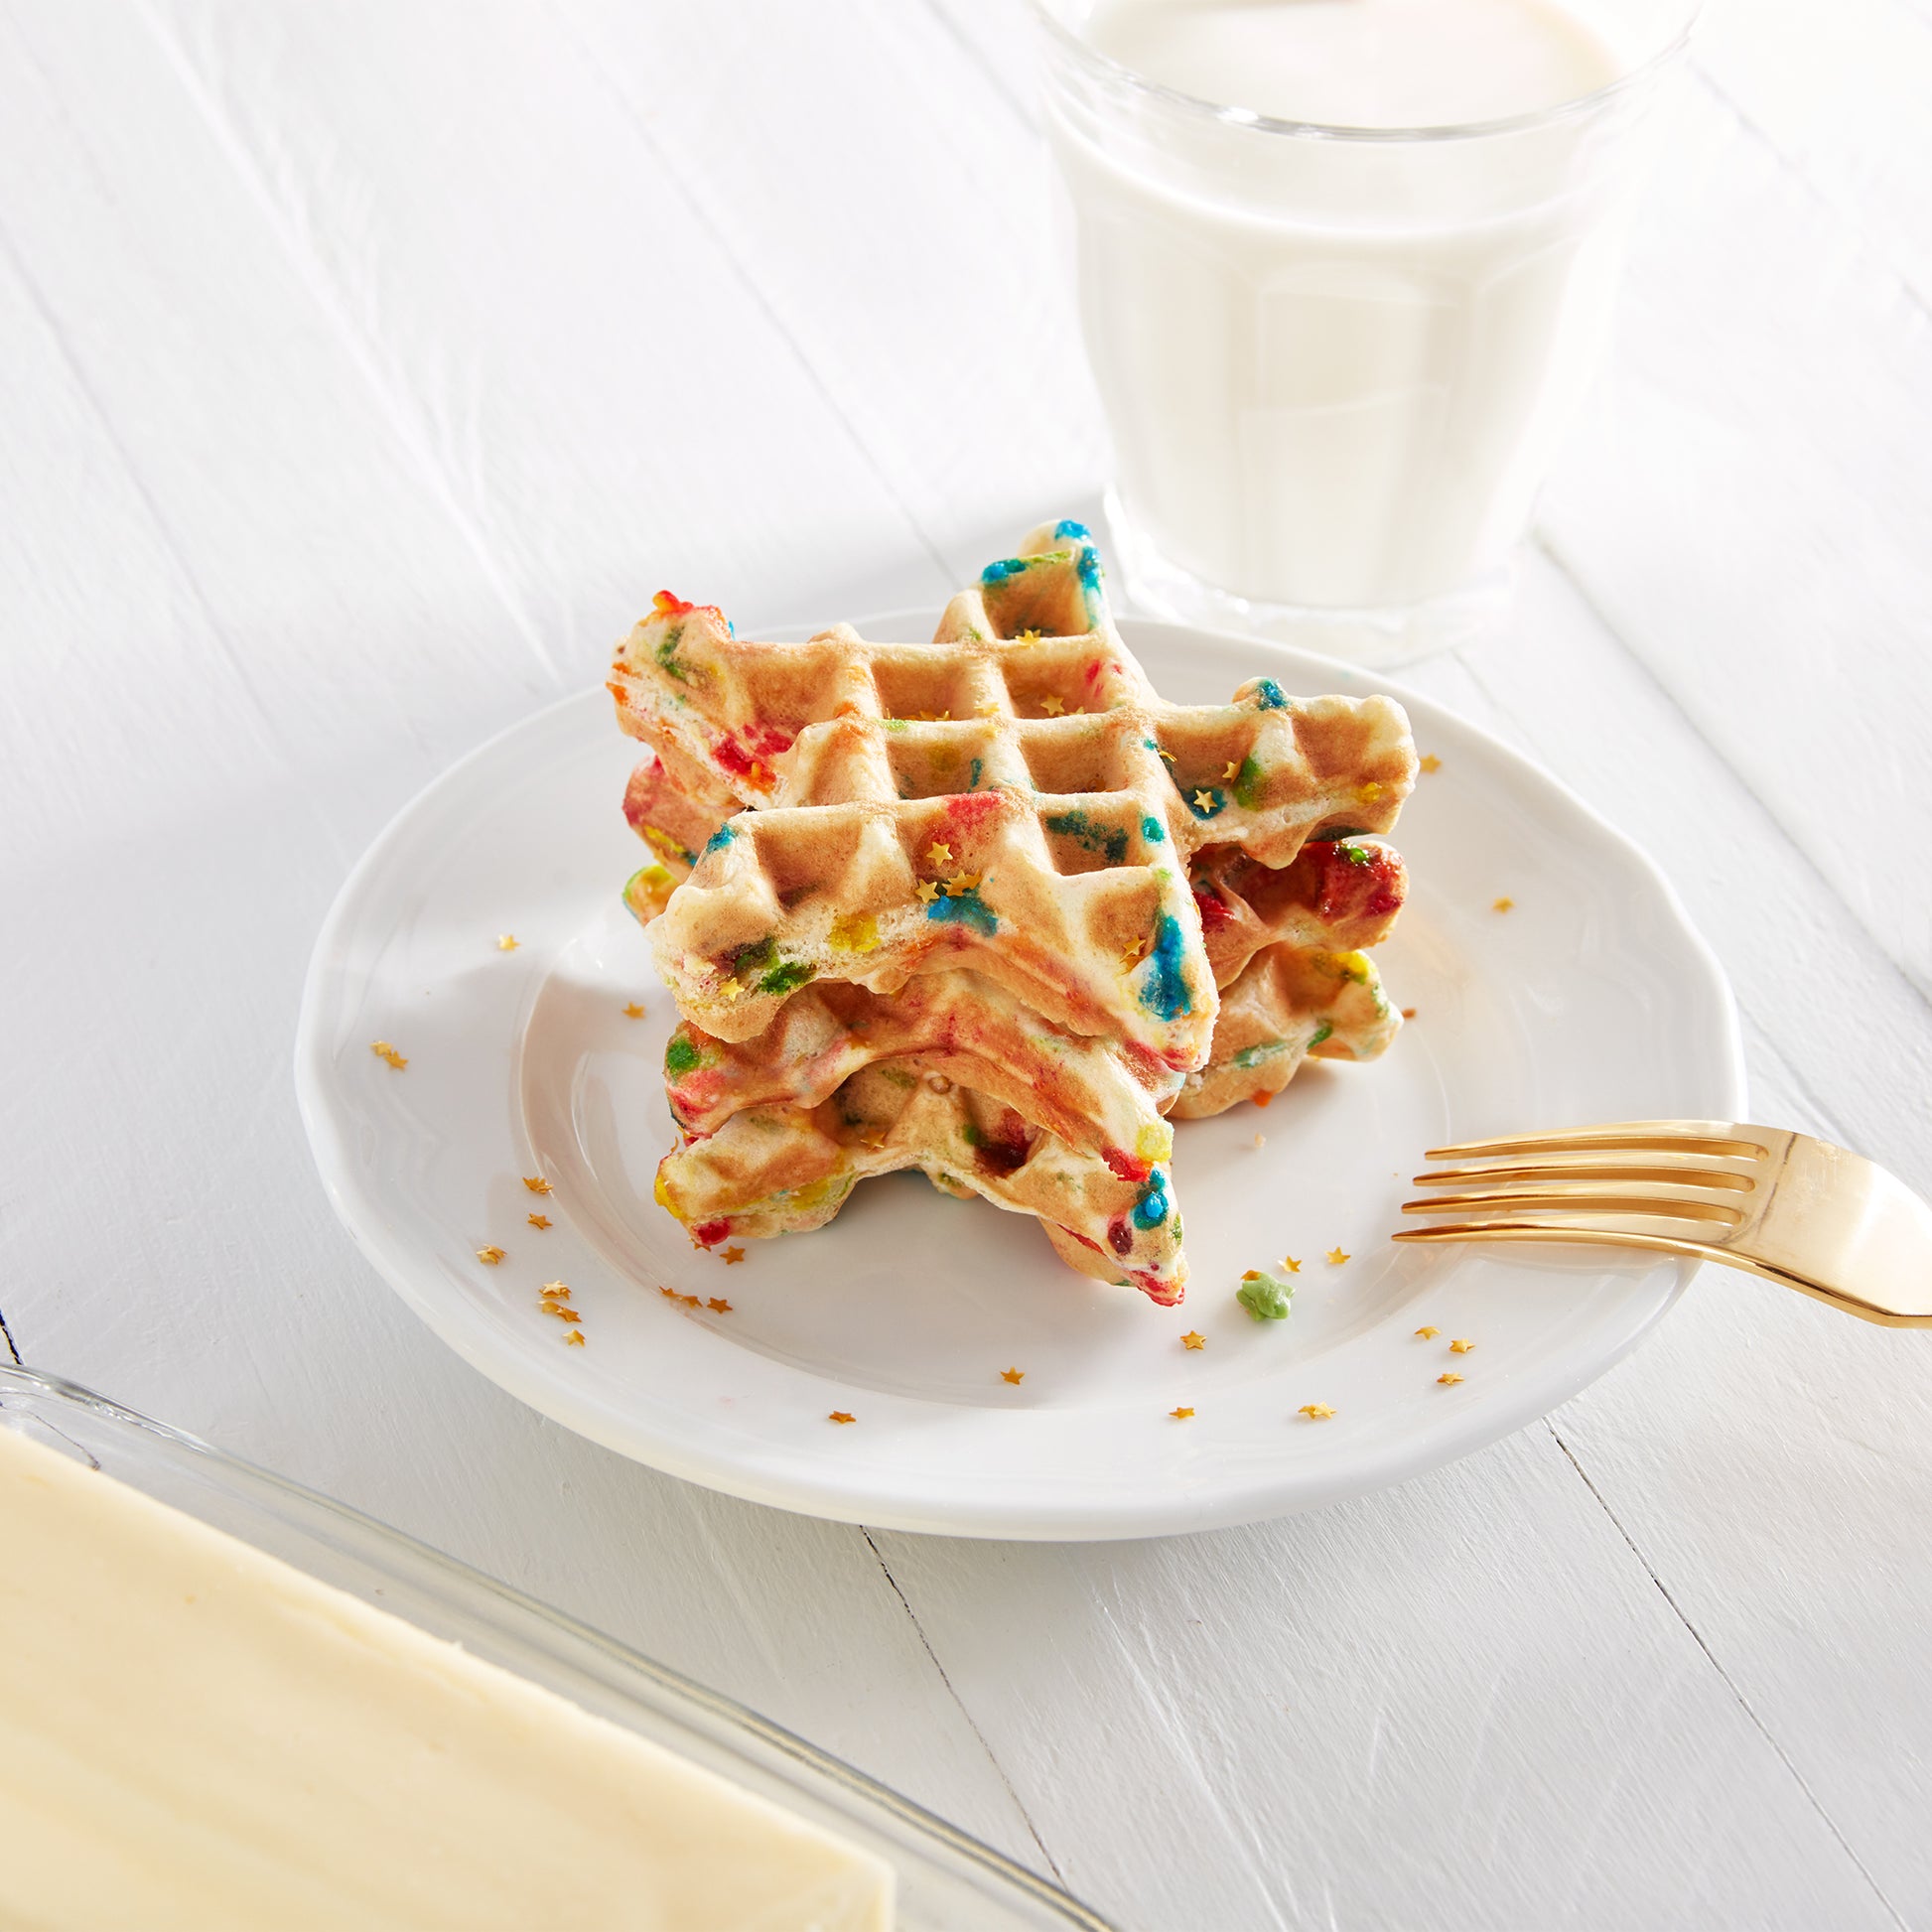 Dash Snowman Mini Waffle Maker with Ceramic Non-Stick Plates + Reviews